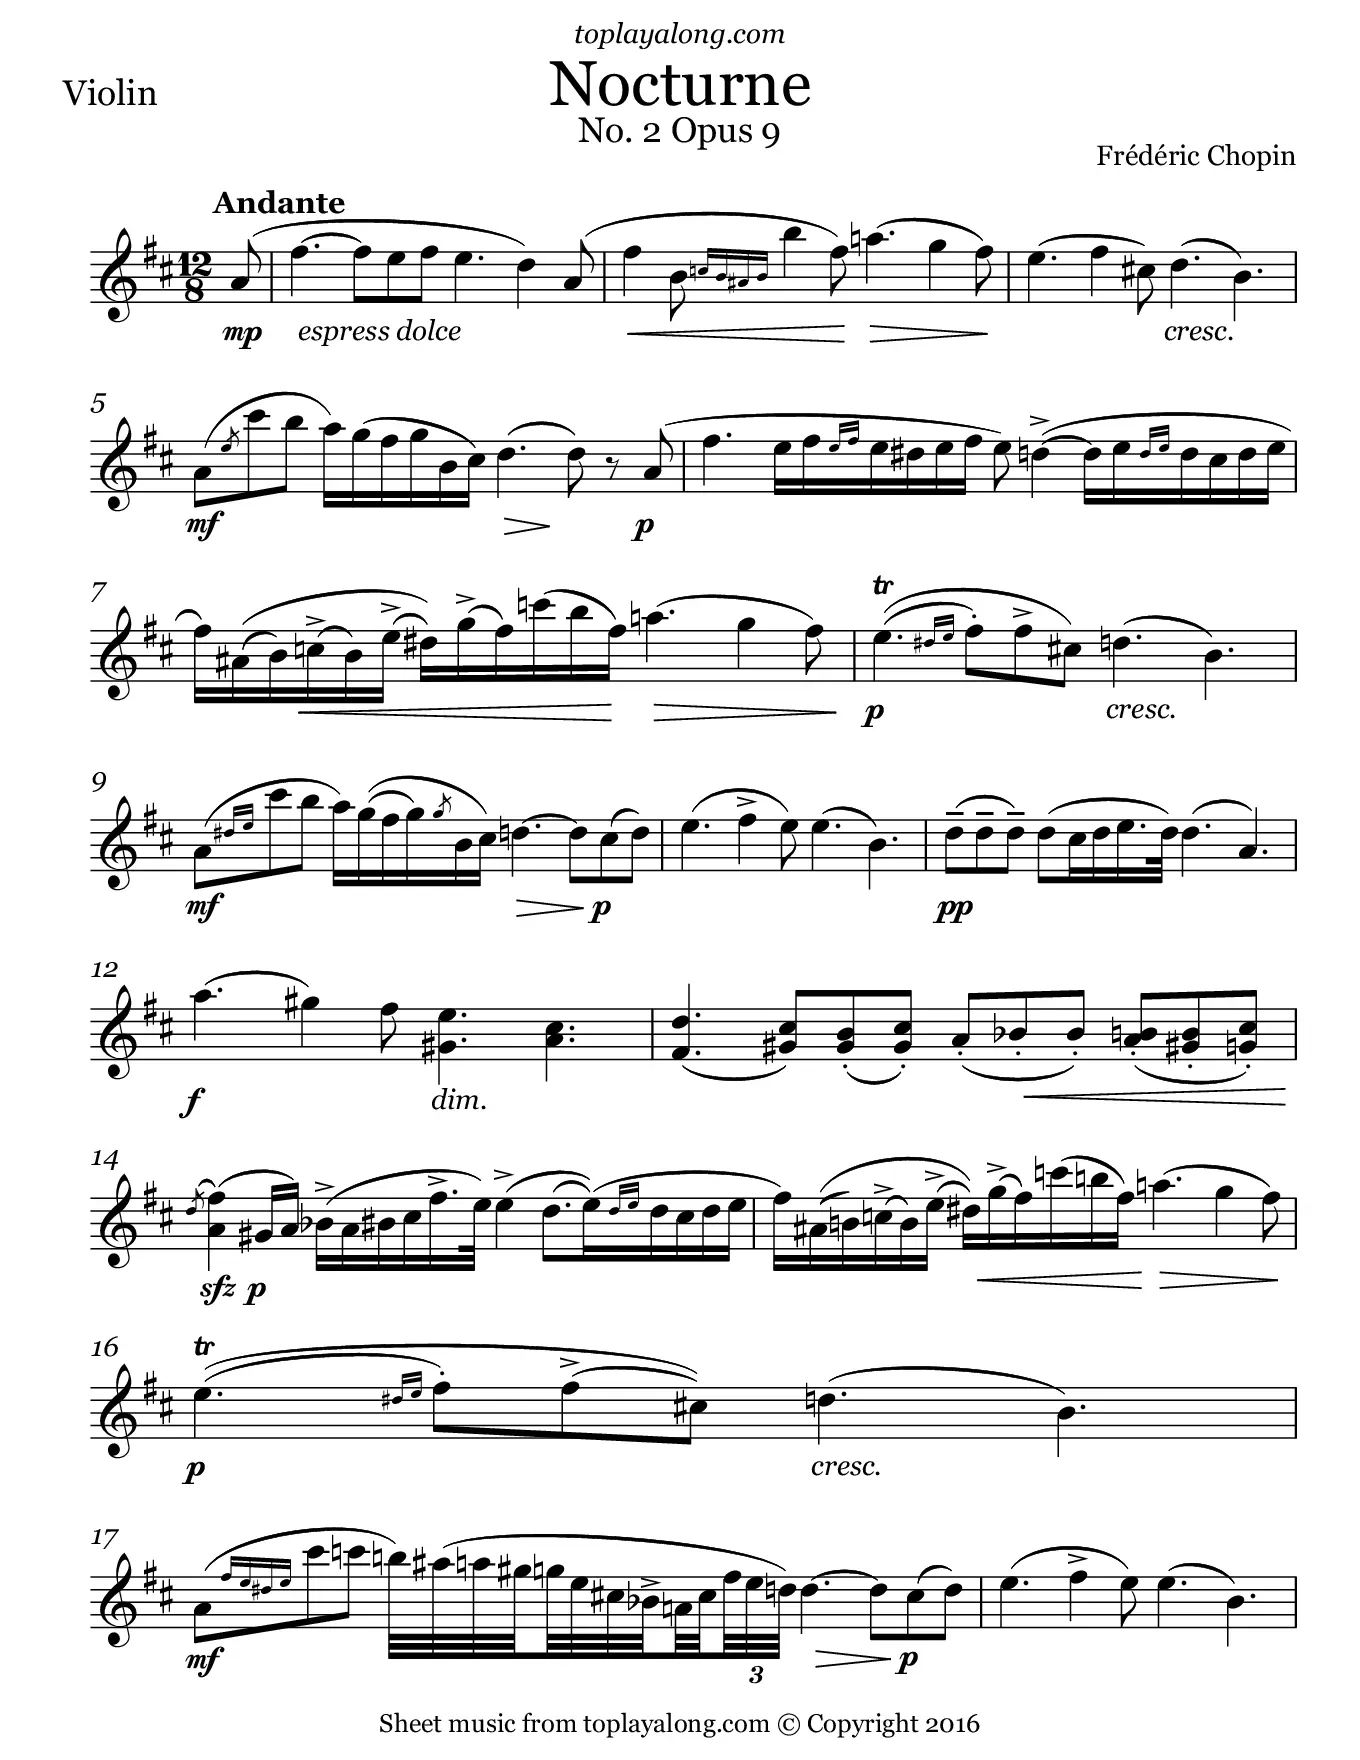 nocturne violin notes - Is nocturne homophonic